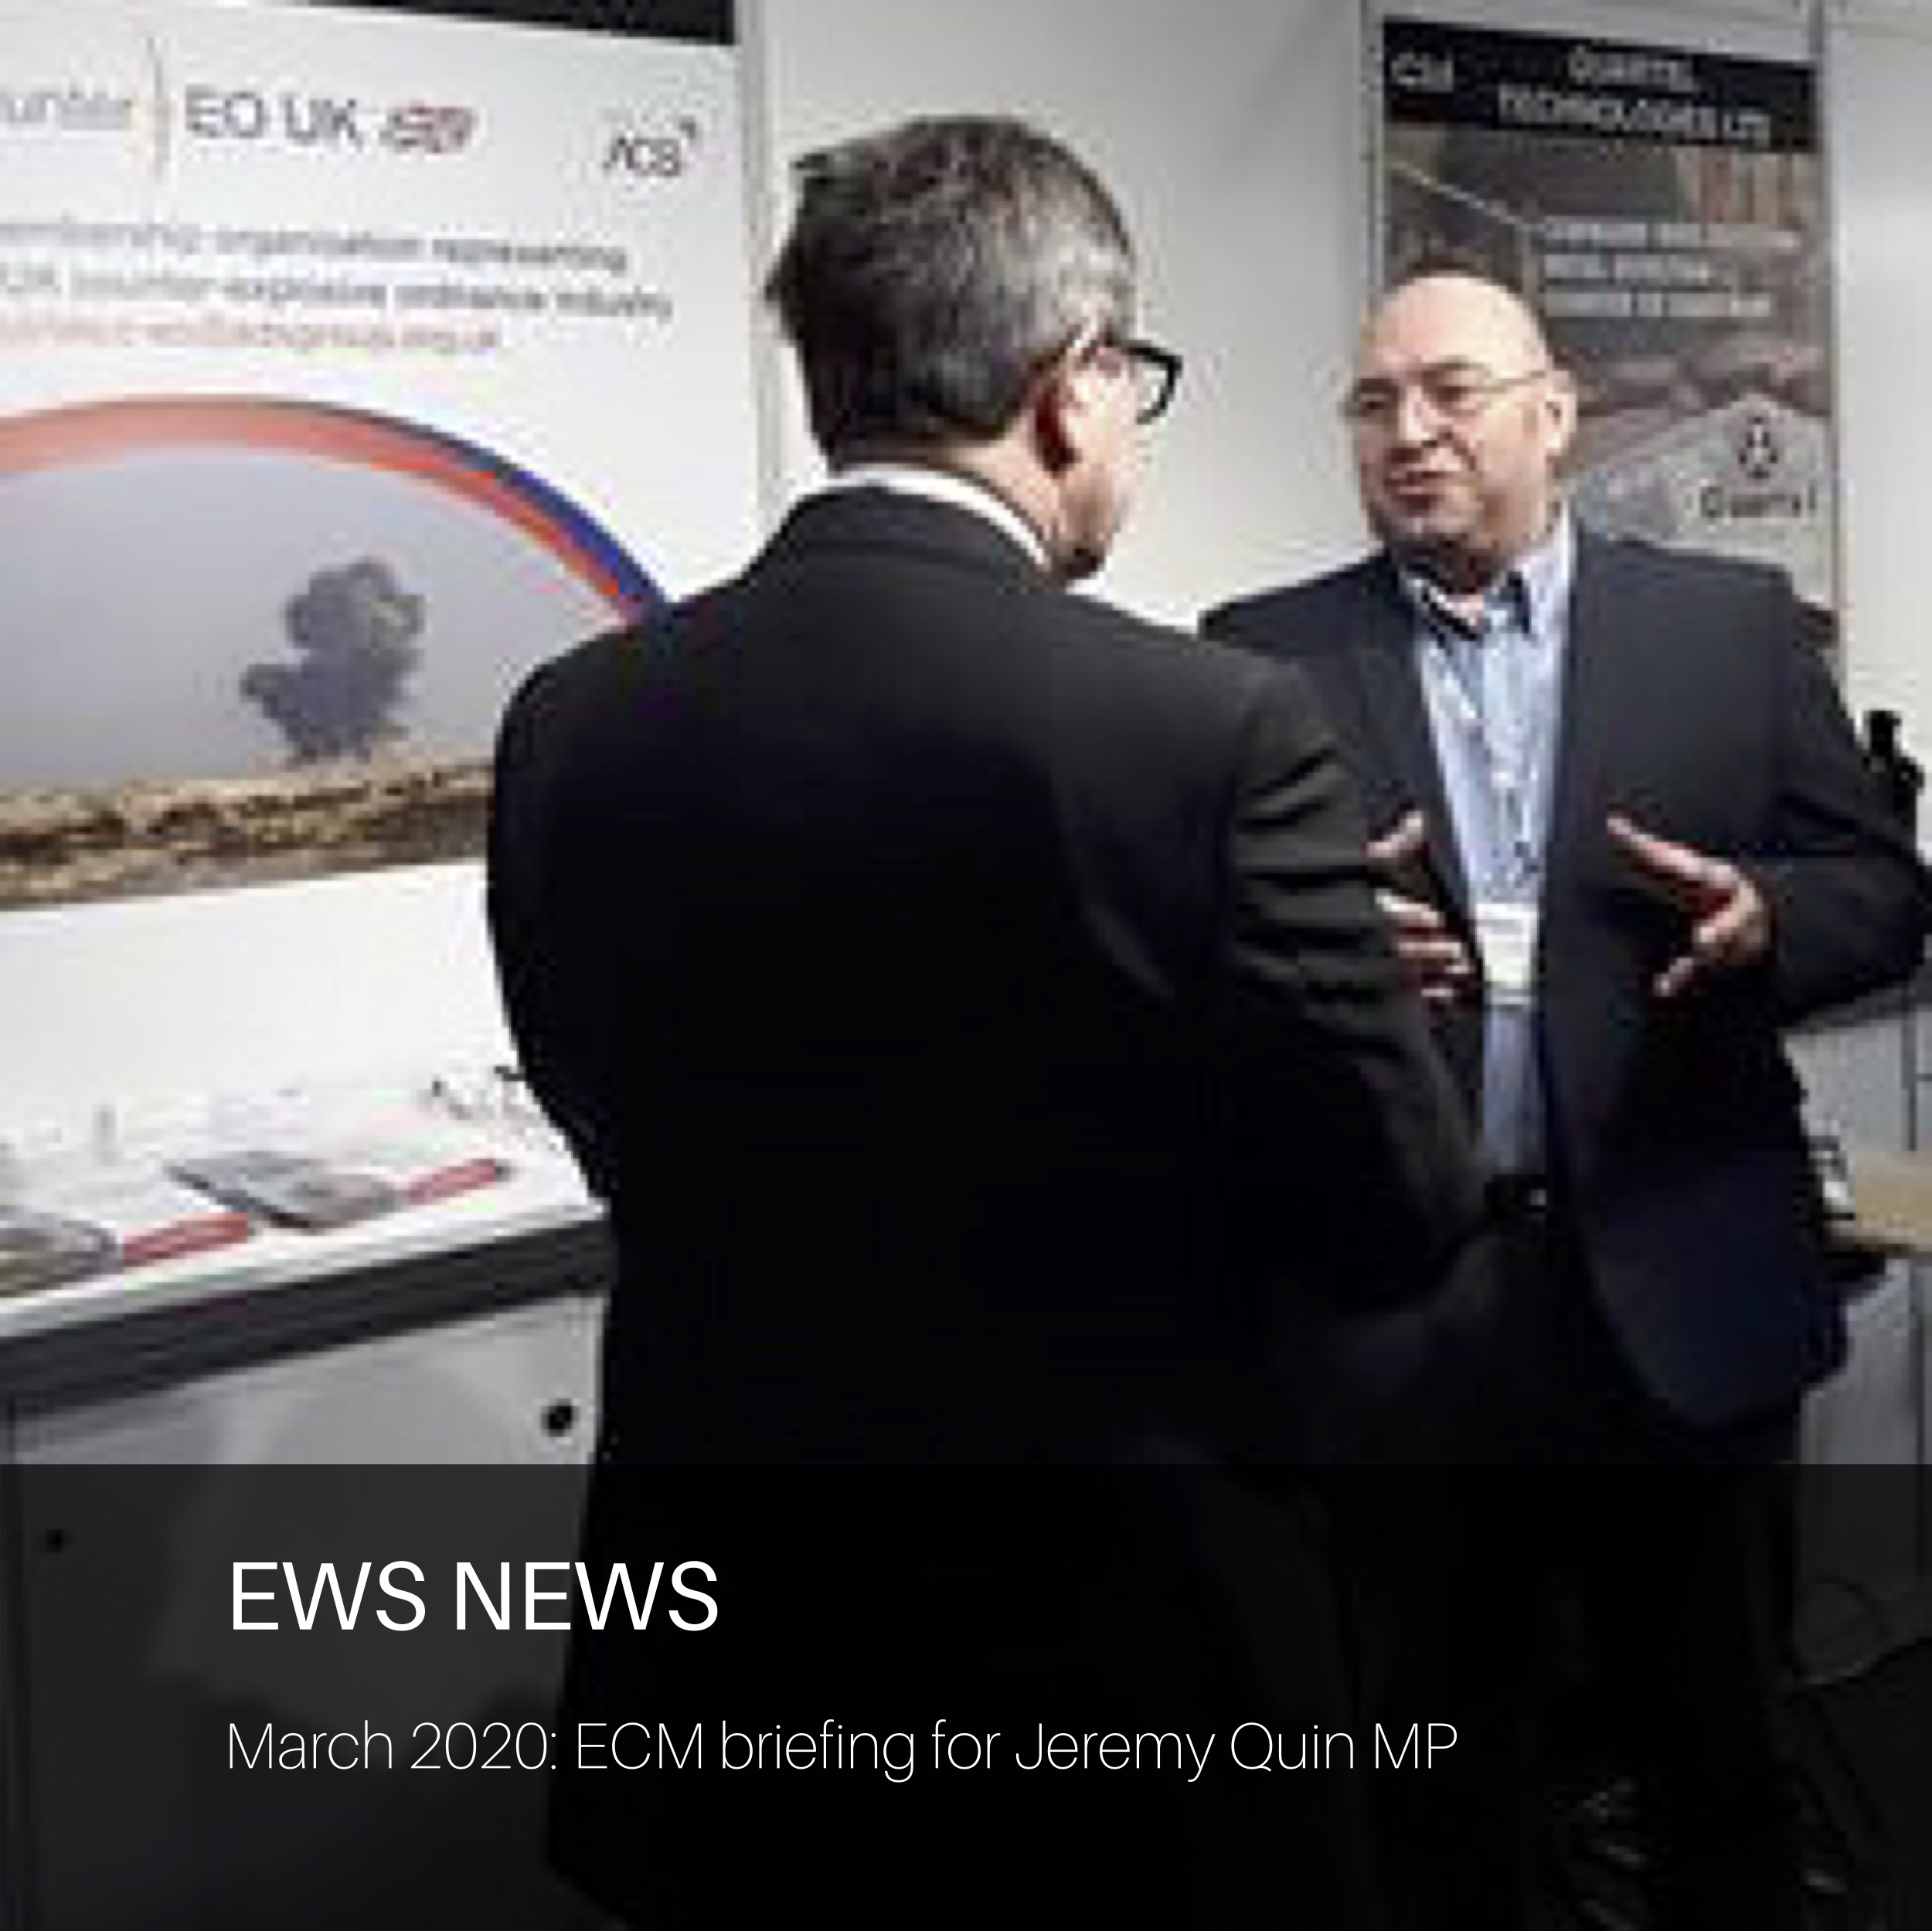 EWS news - ECM briefing for Jeremy Quin MP